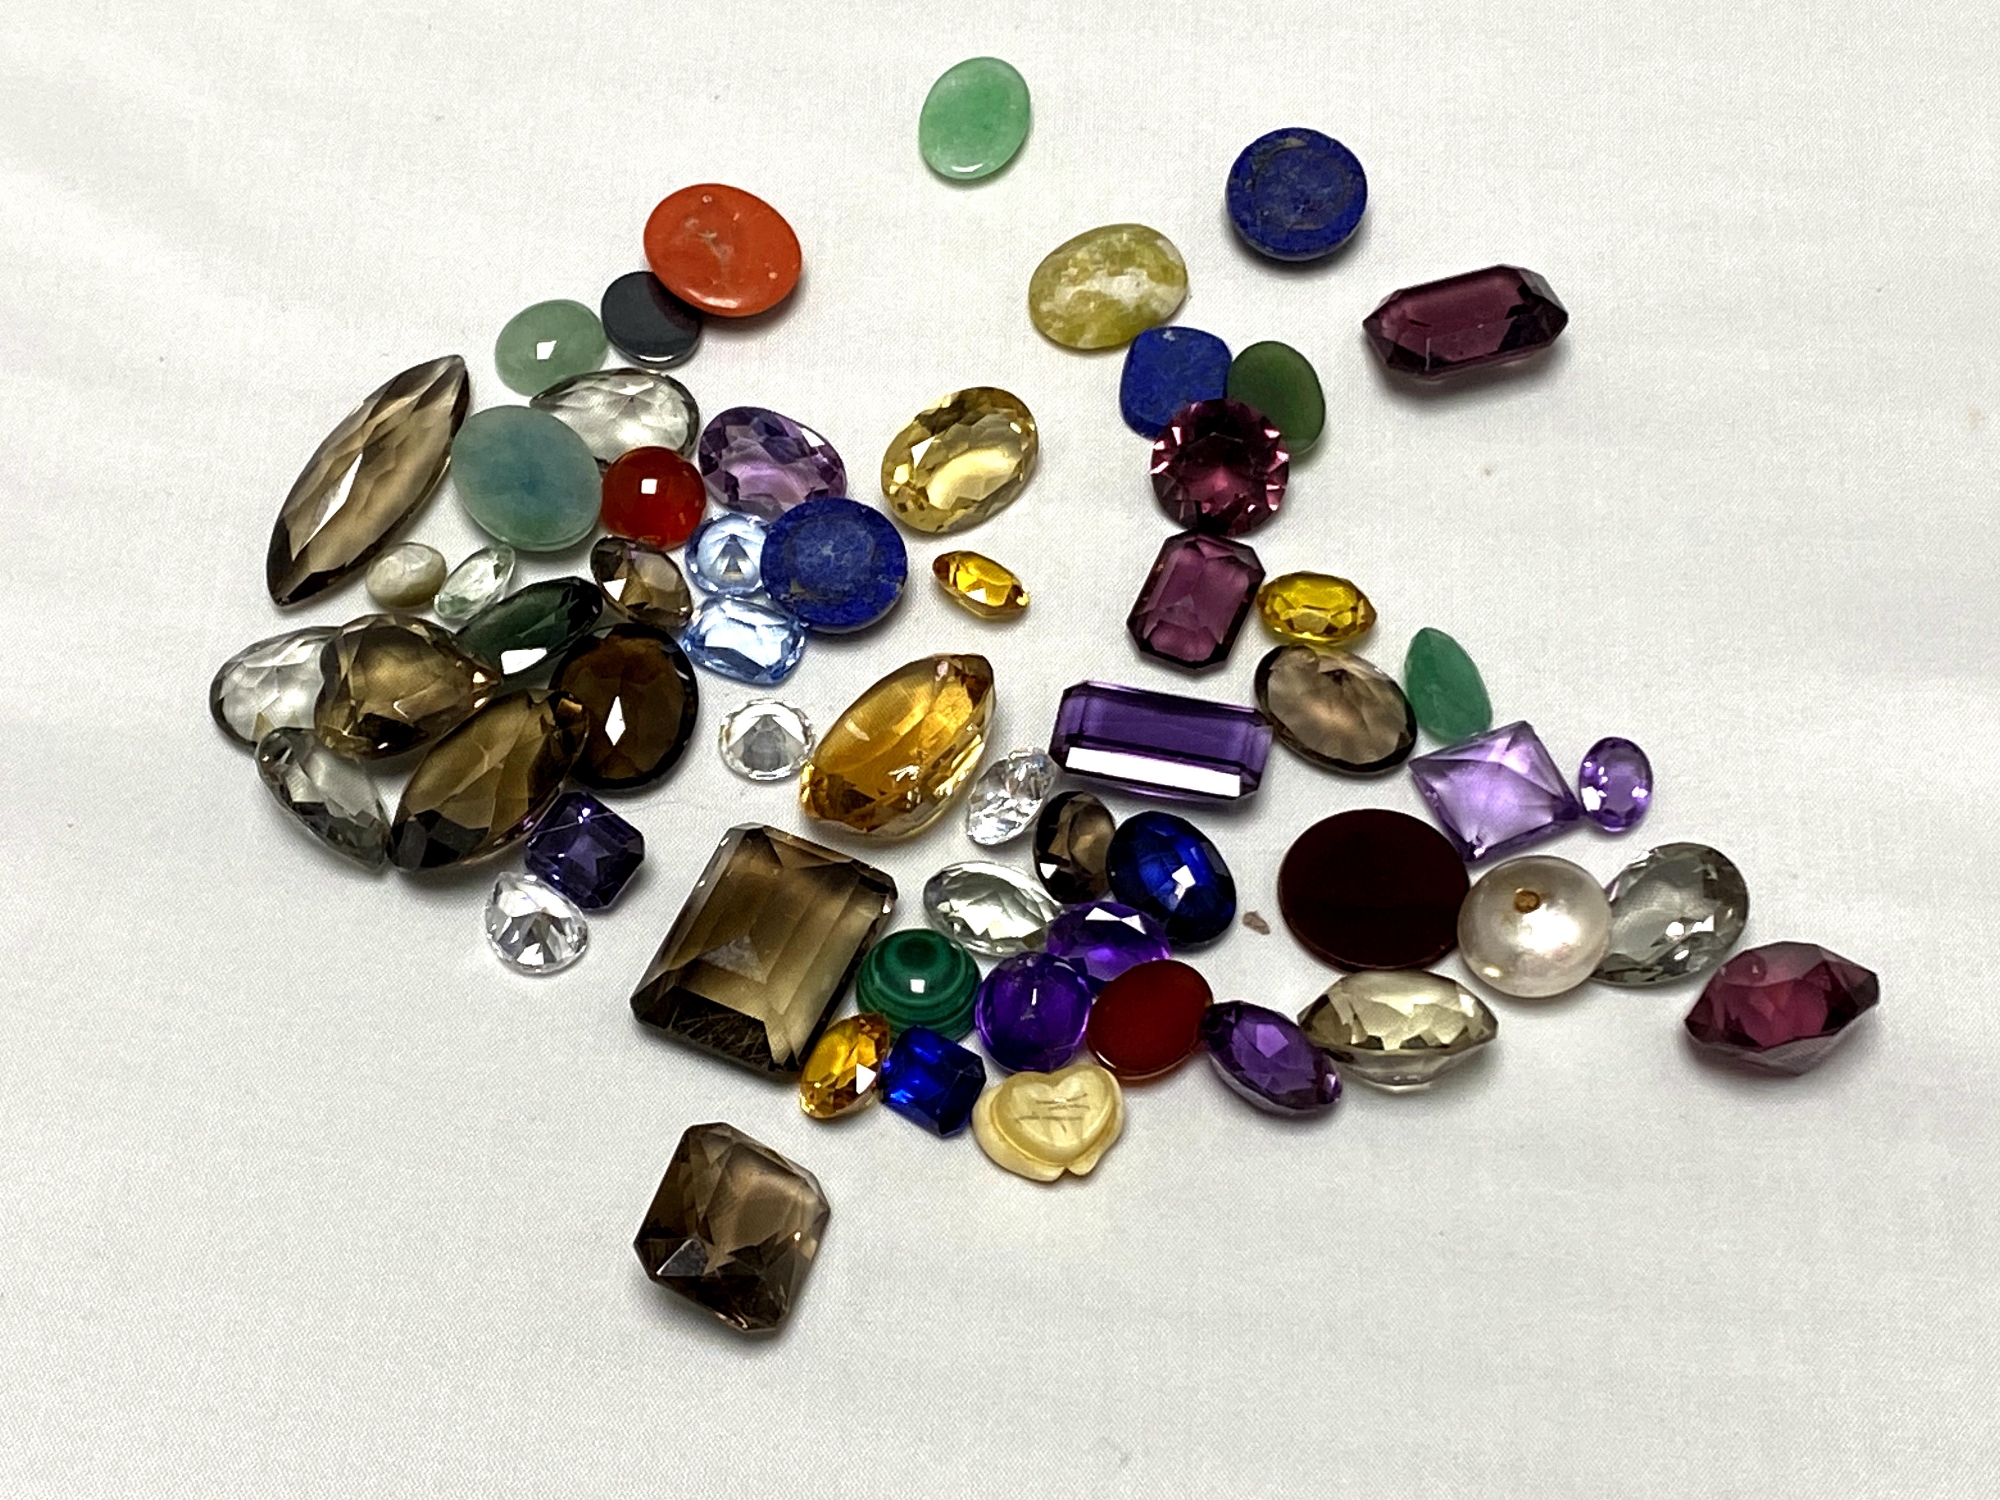 A quantity of gemstones